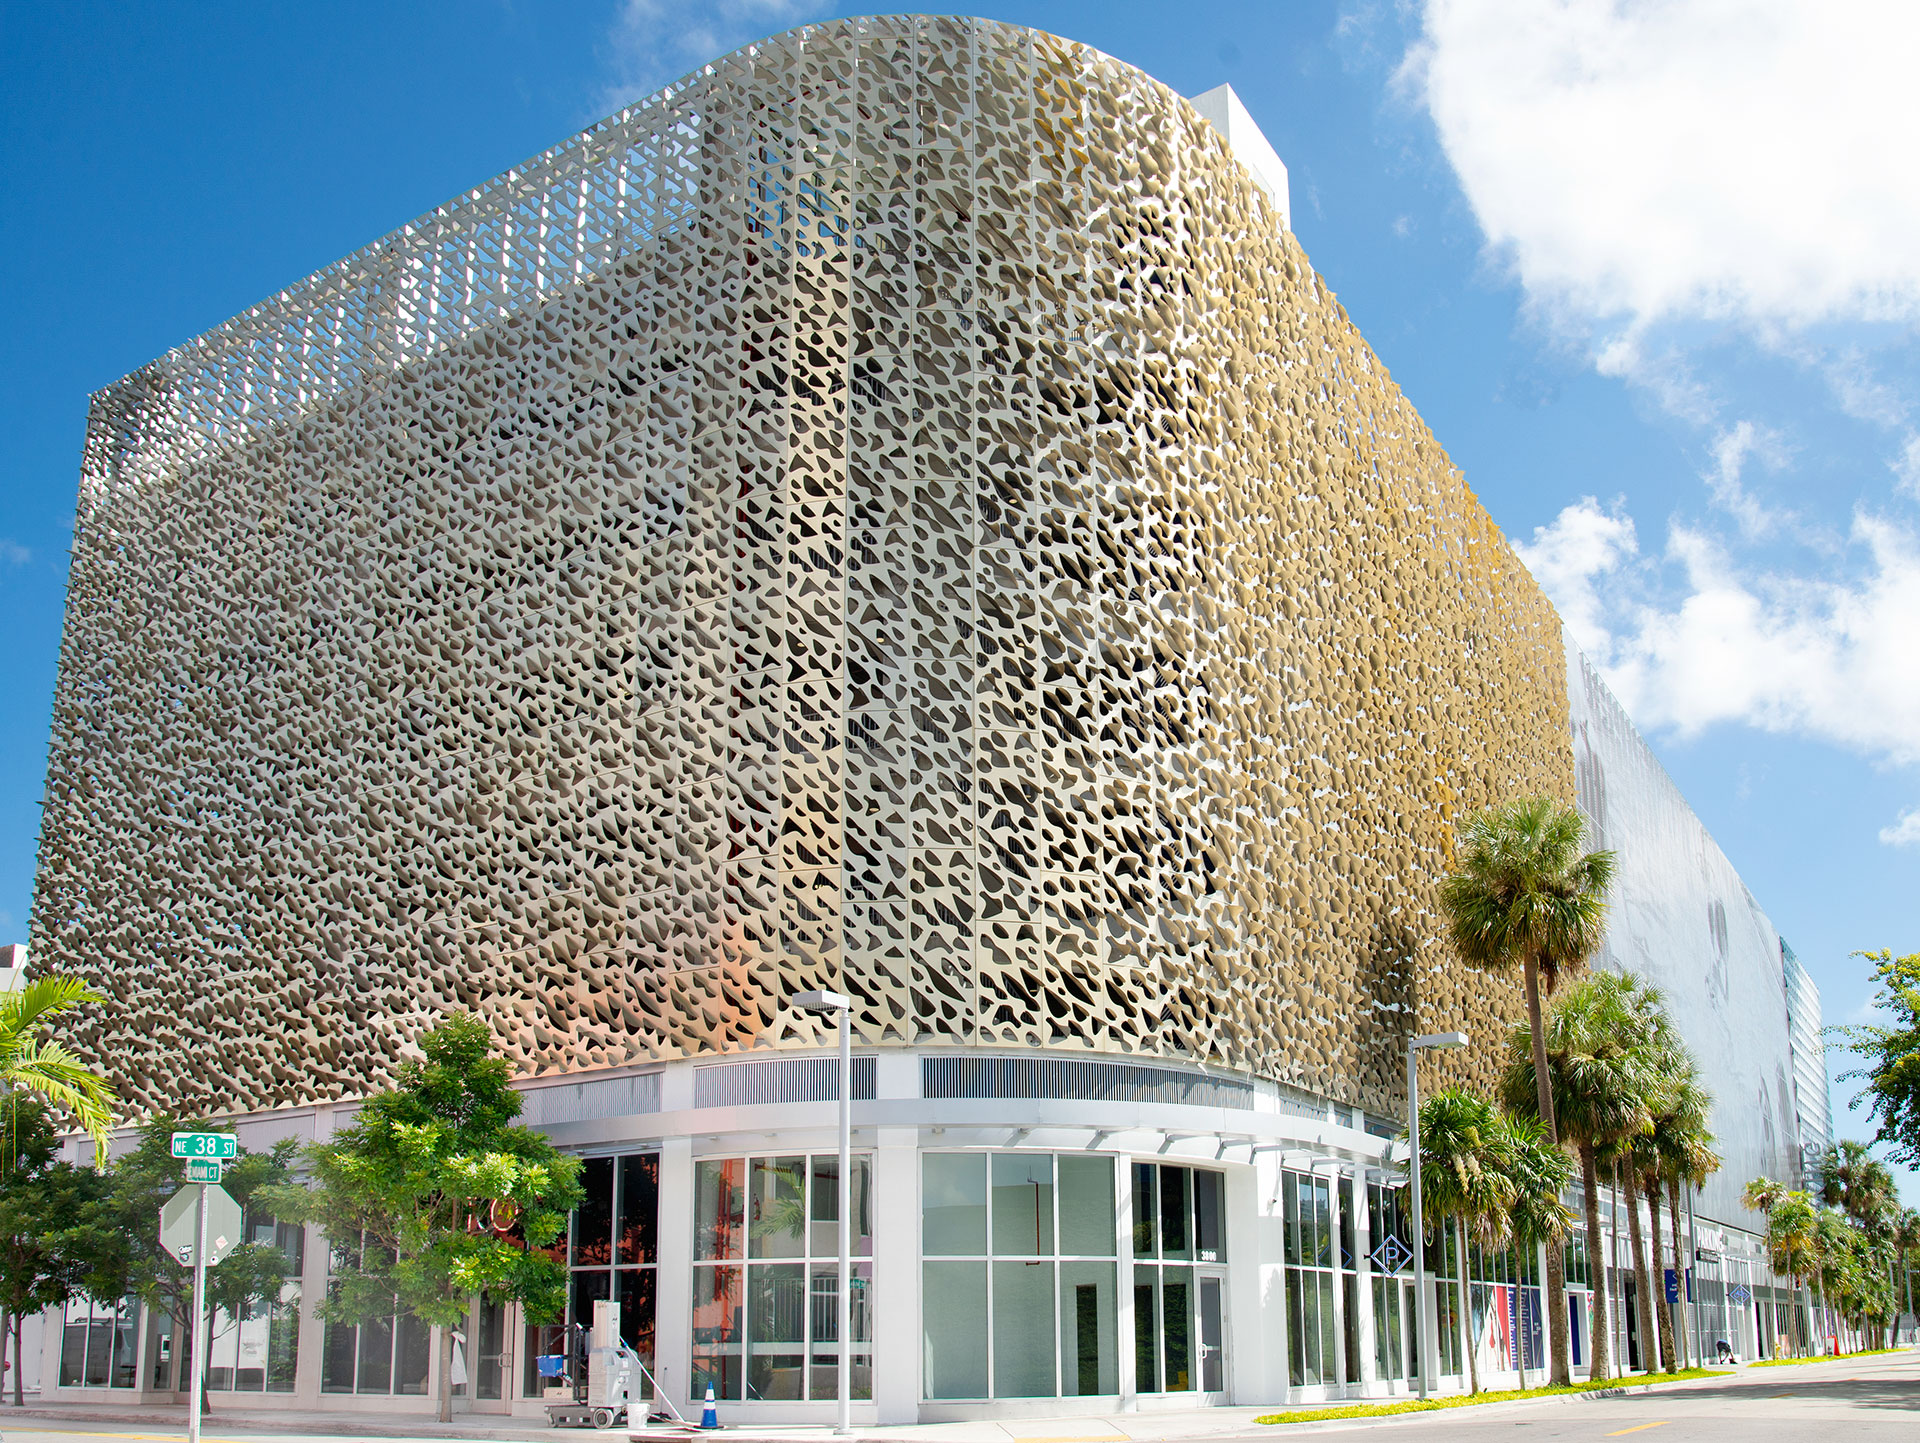 Dacra leasing new Design District phase - Miami Today